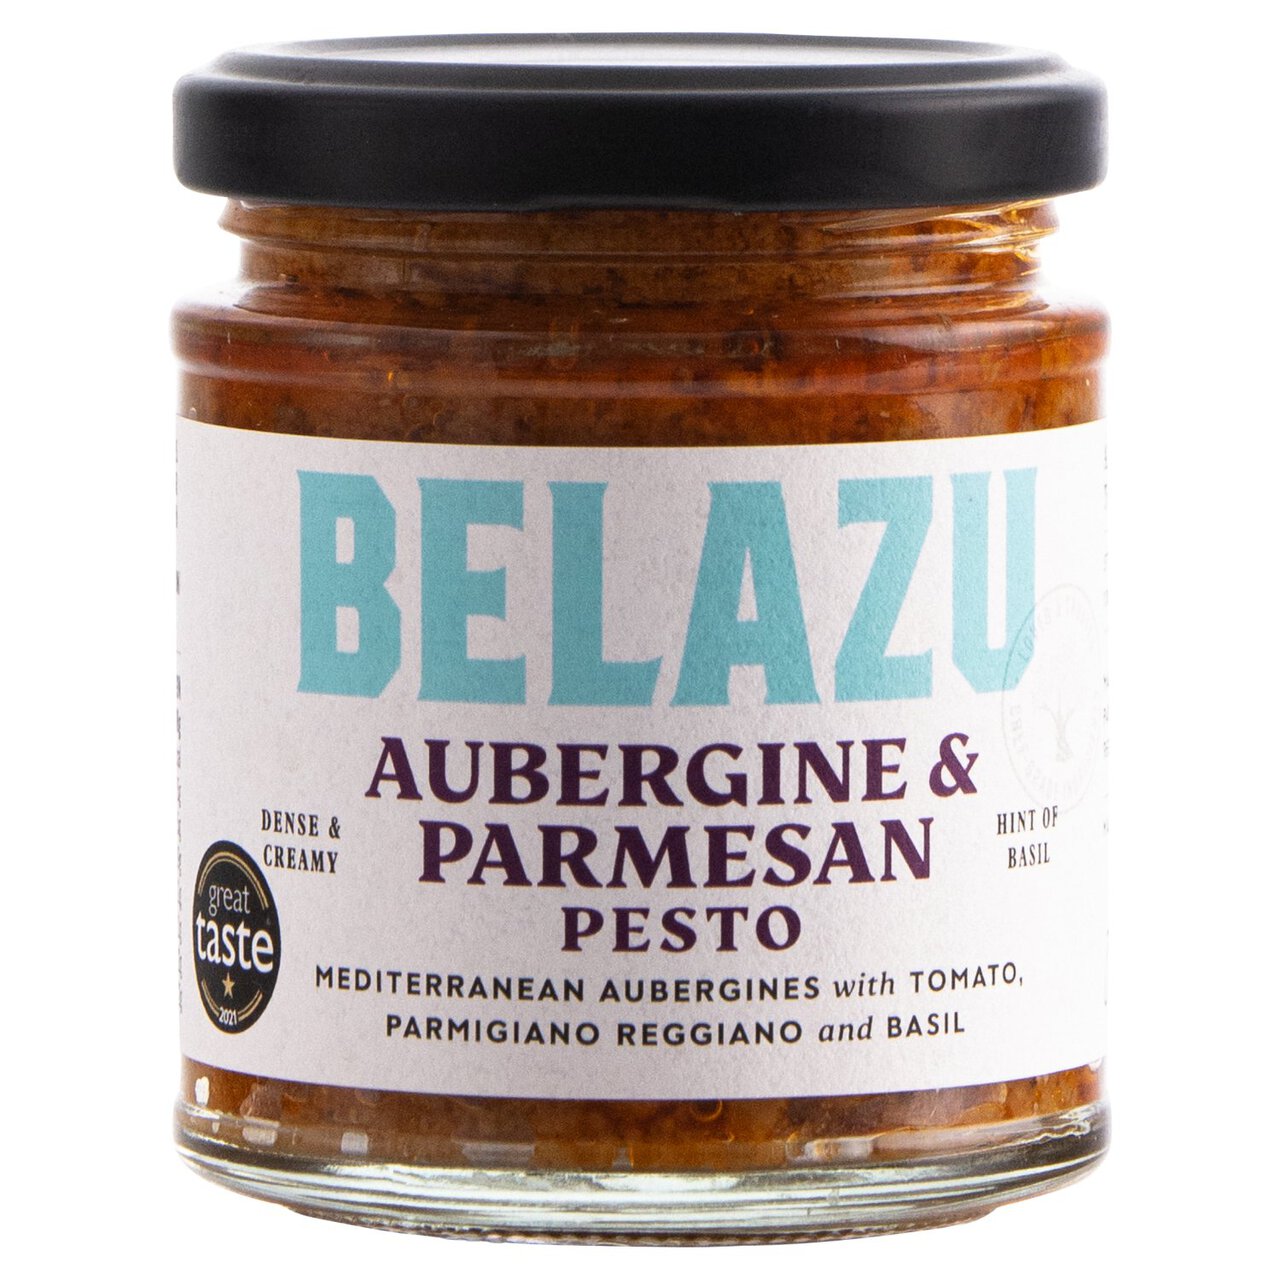 Belazu Aubergine & Parmesan Pesto 165g